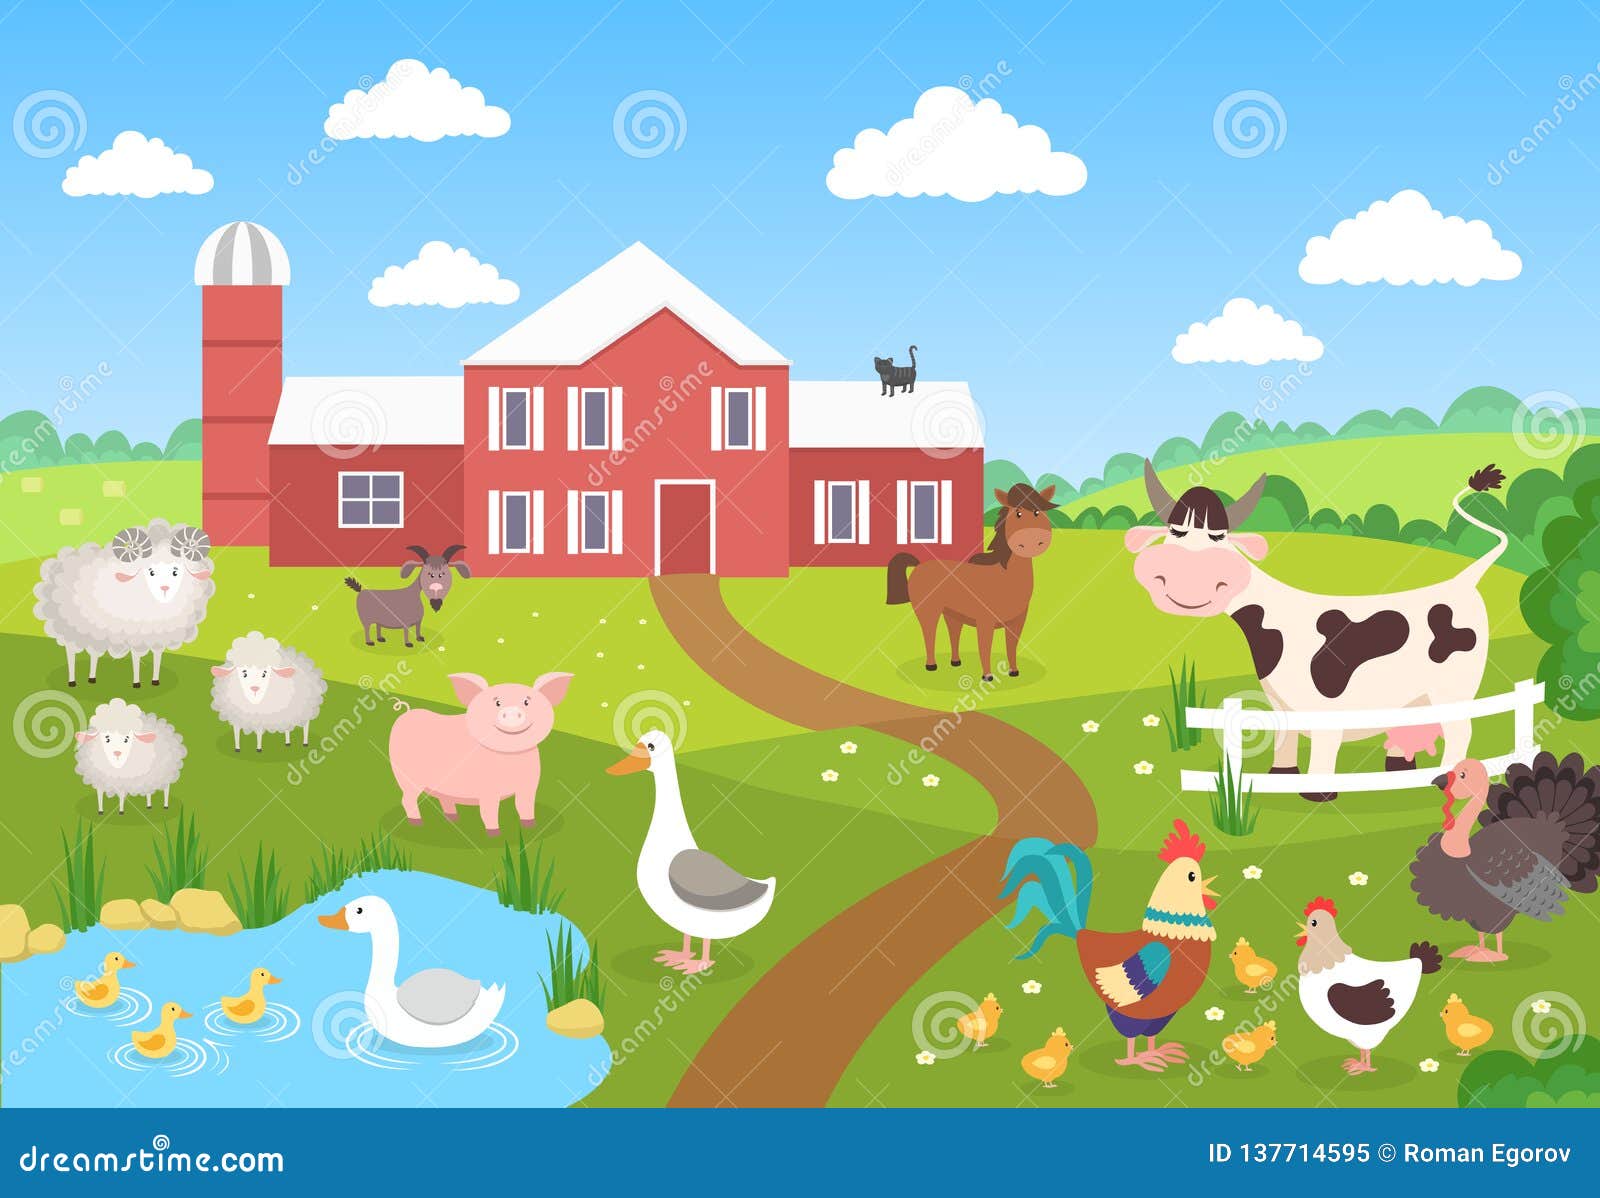 farm animals with landscape. horse pig duck chickens sheep. cartoon village for children book. farm background scene